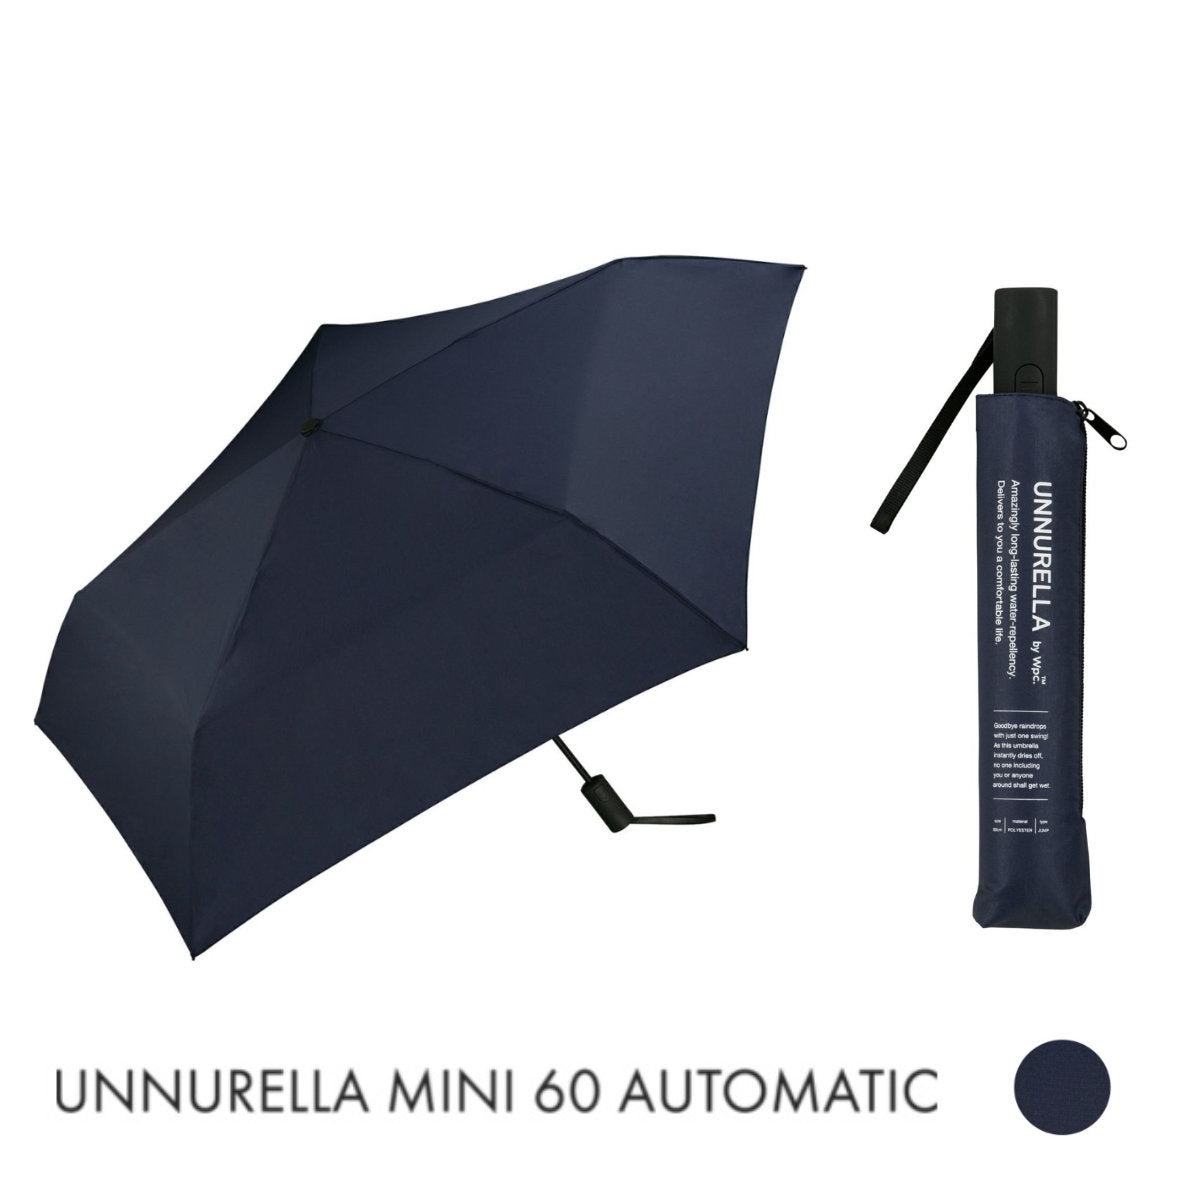 W.P.C. - 【自動開關款】UNNURELLA MINI 60 超跣水折疊傘 UN003 - 深藍色